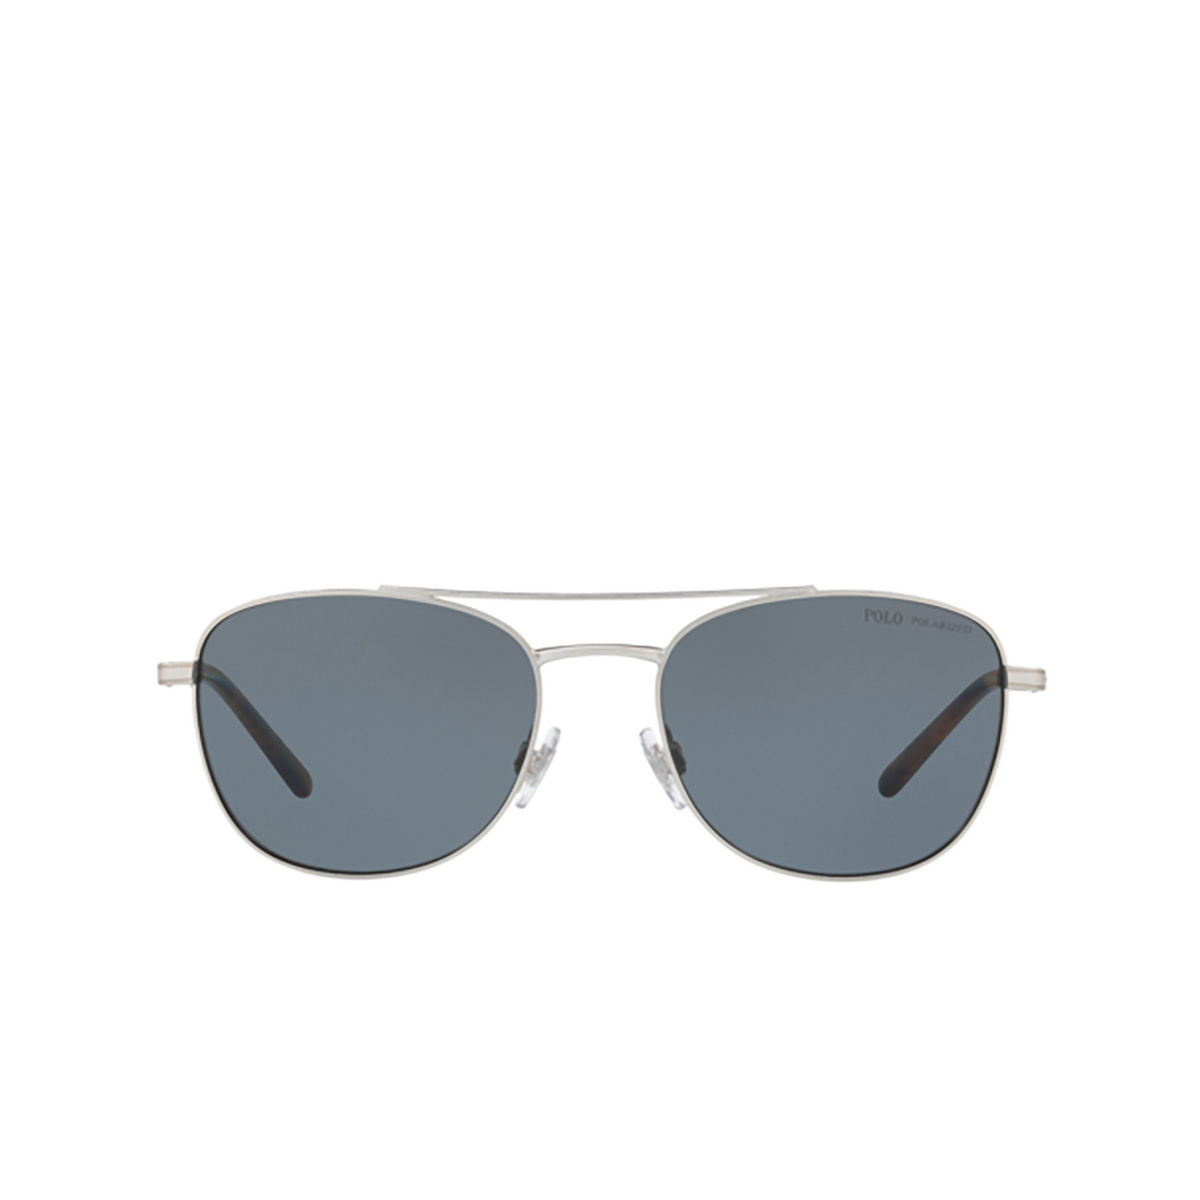 Polo Ralph Lauren® Square Sunglasses: PH3107 color 932681 - front view.